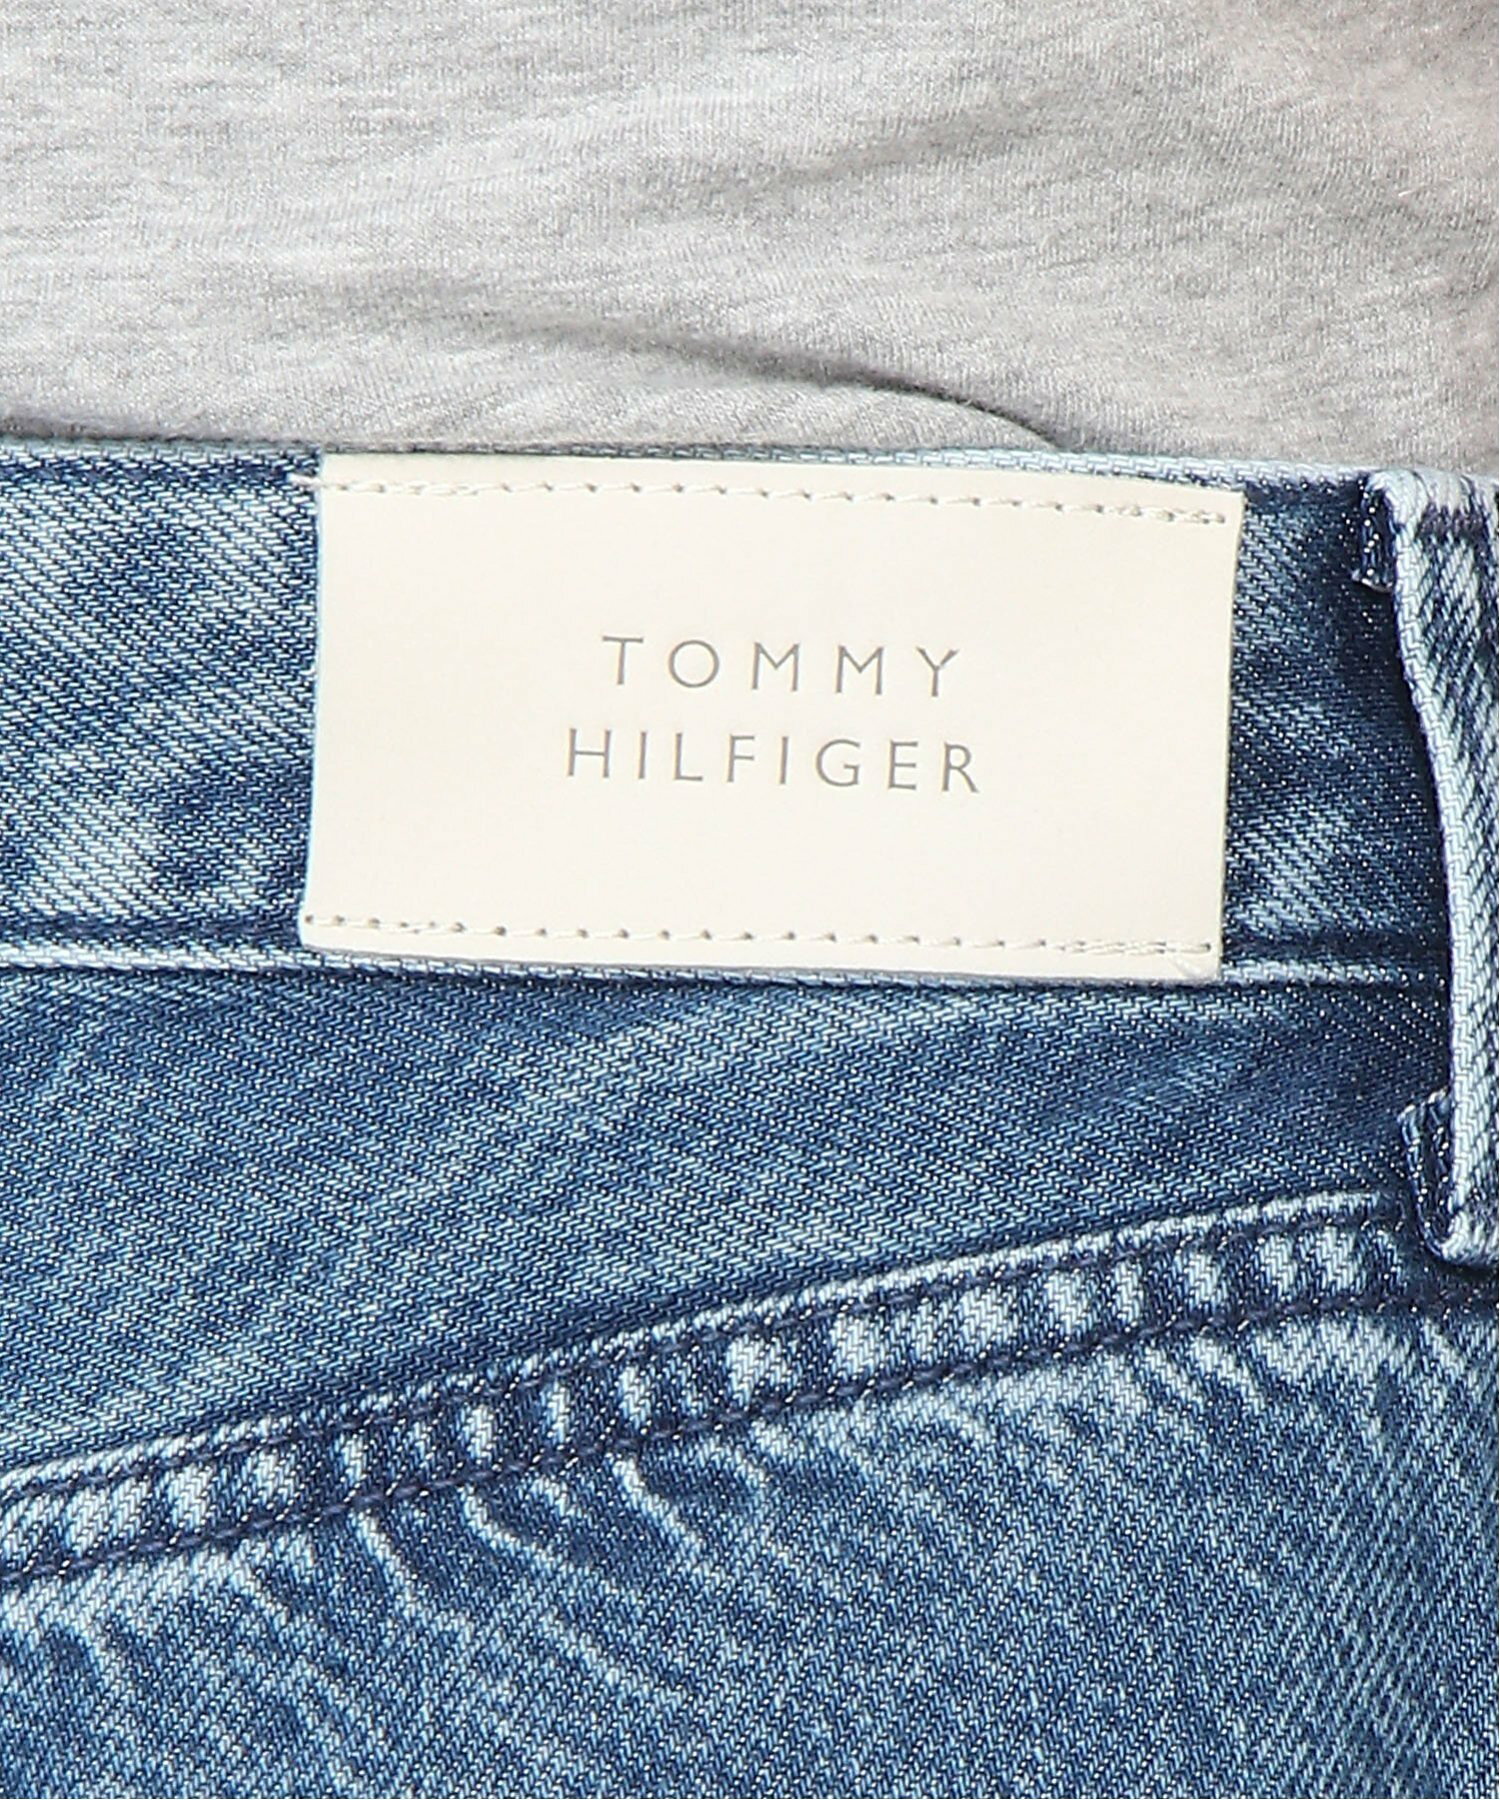 TOMMY HILFIGER(トミーヒルフィガー) ルーズストレートクロップドジーンズ